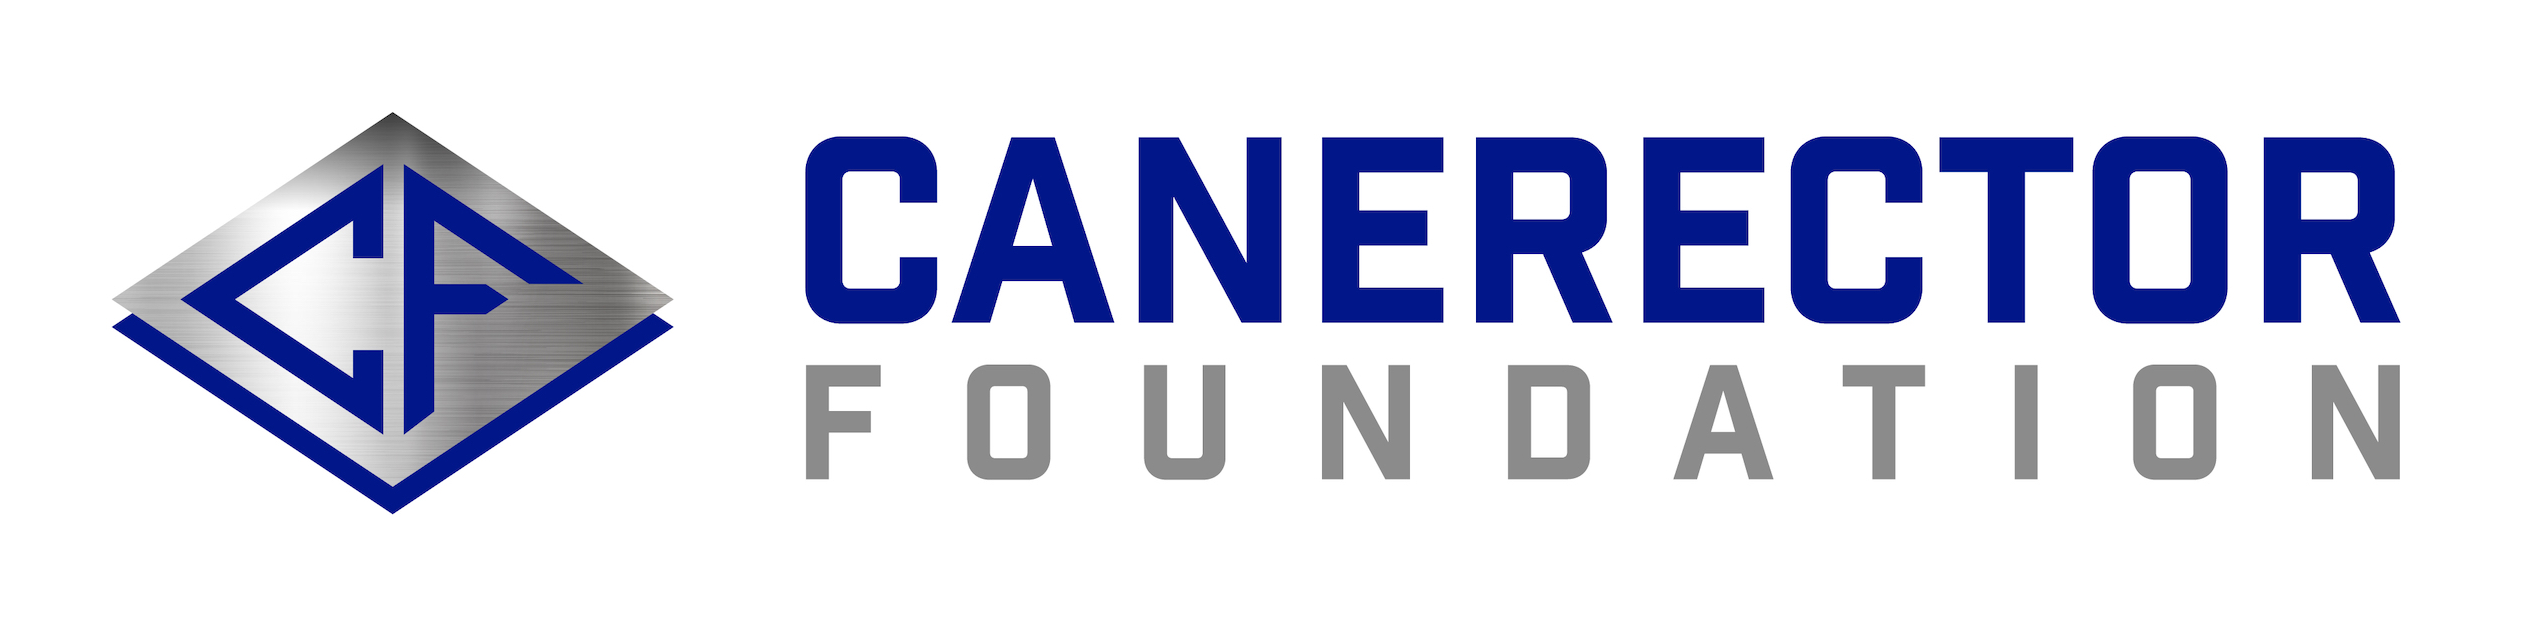 Canerector Foundation